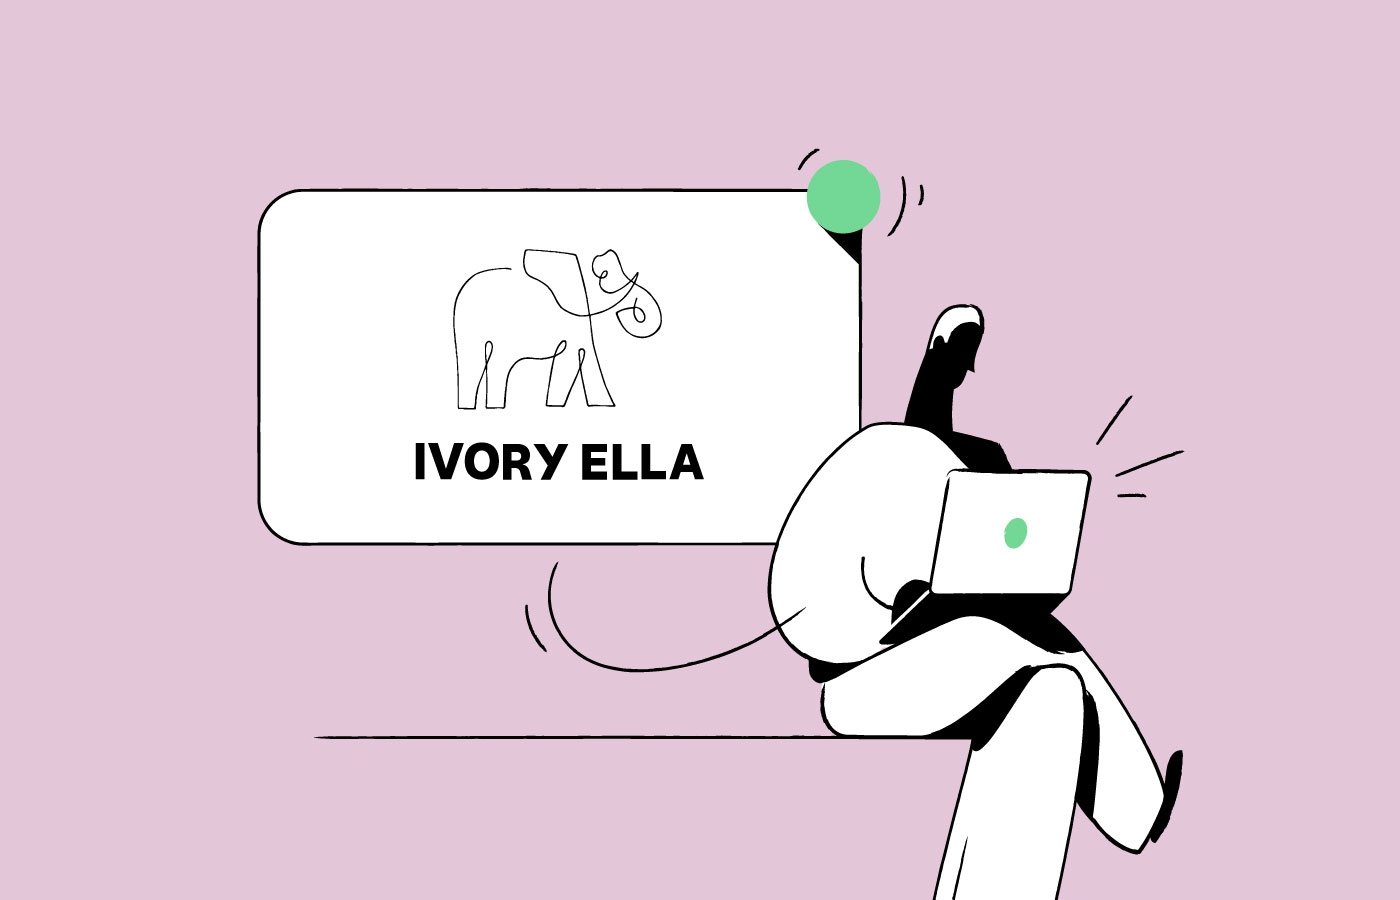 Ivory Ella generates + $1 million revenue with Firepush web push notifications